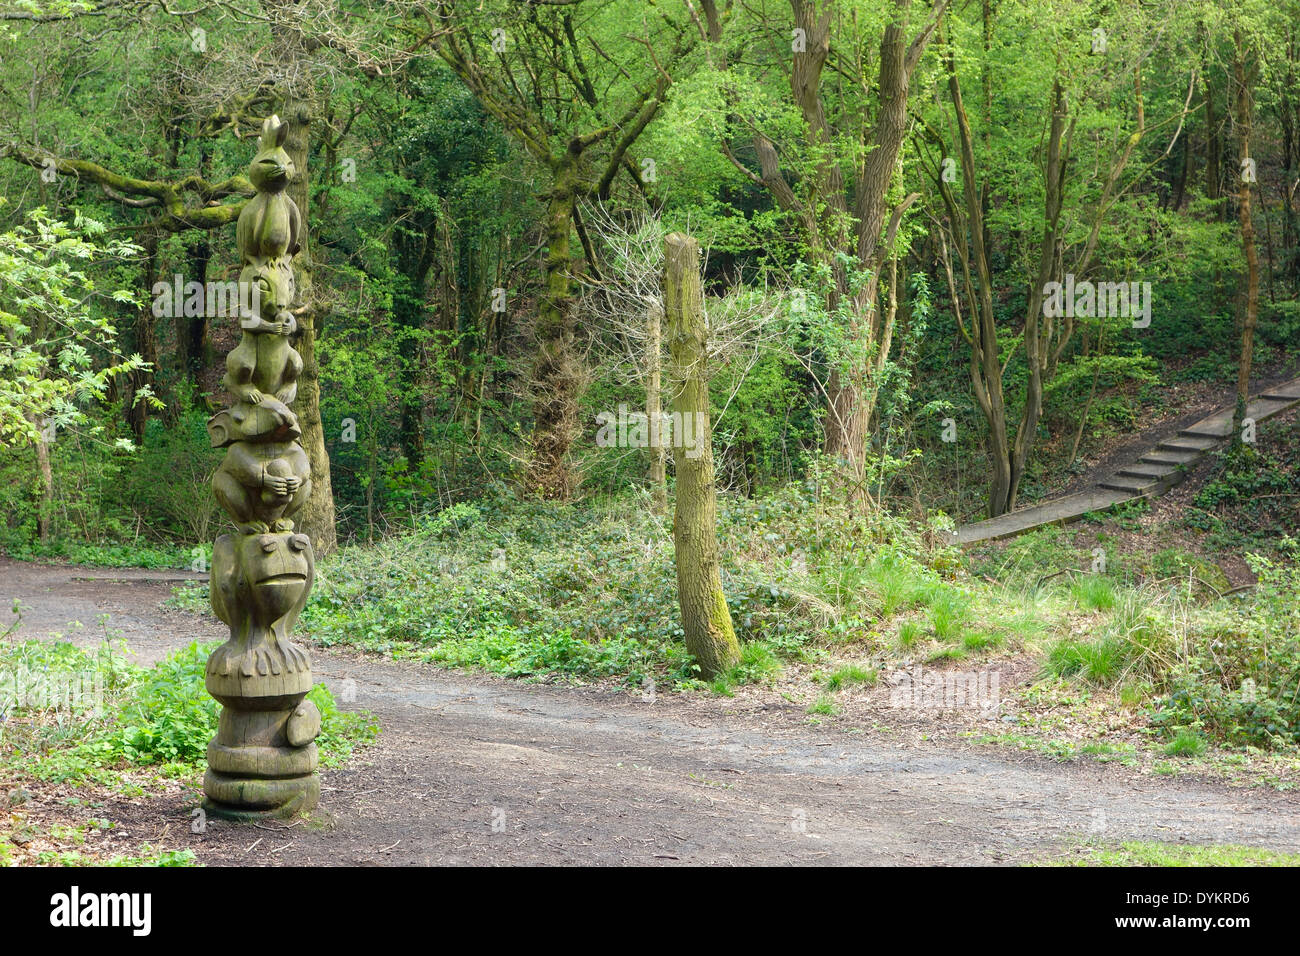 Sculptures at Saltwells Wood Local Nature Reserve, Quarry Bank, West Midlands, England, UK. Part of the Sculpture Trail Walk. Stock Photo